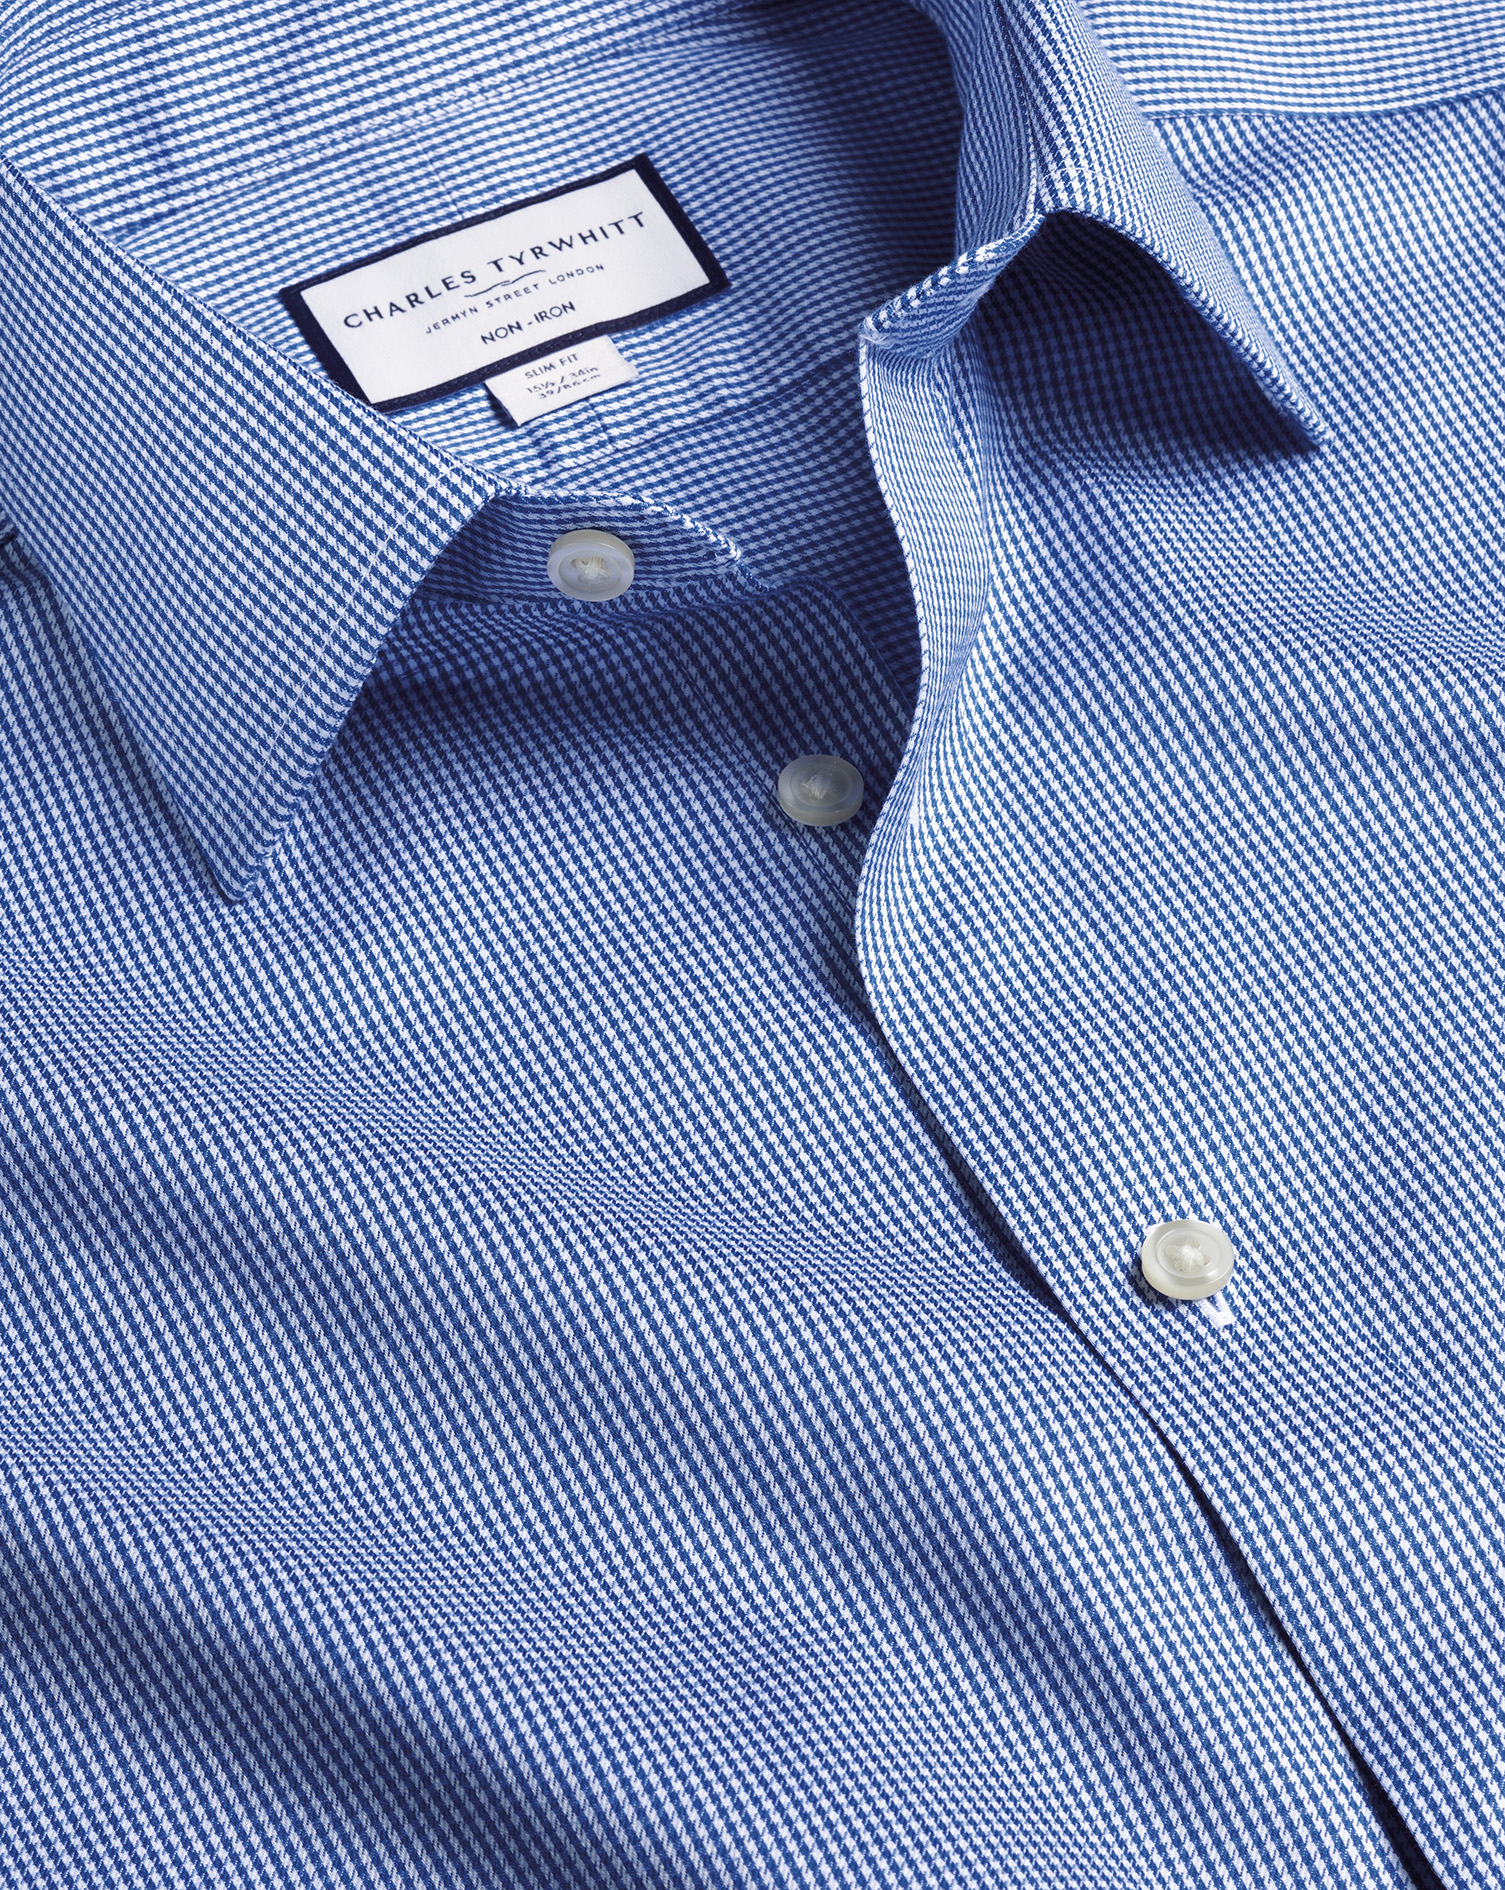 Men's Charles Tyrwhitt Non-Iron Puppytooth Dress Shirt - Royal Blue French Cuff Size Large Cotton
